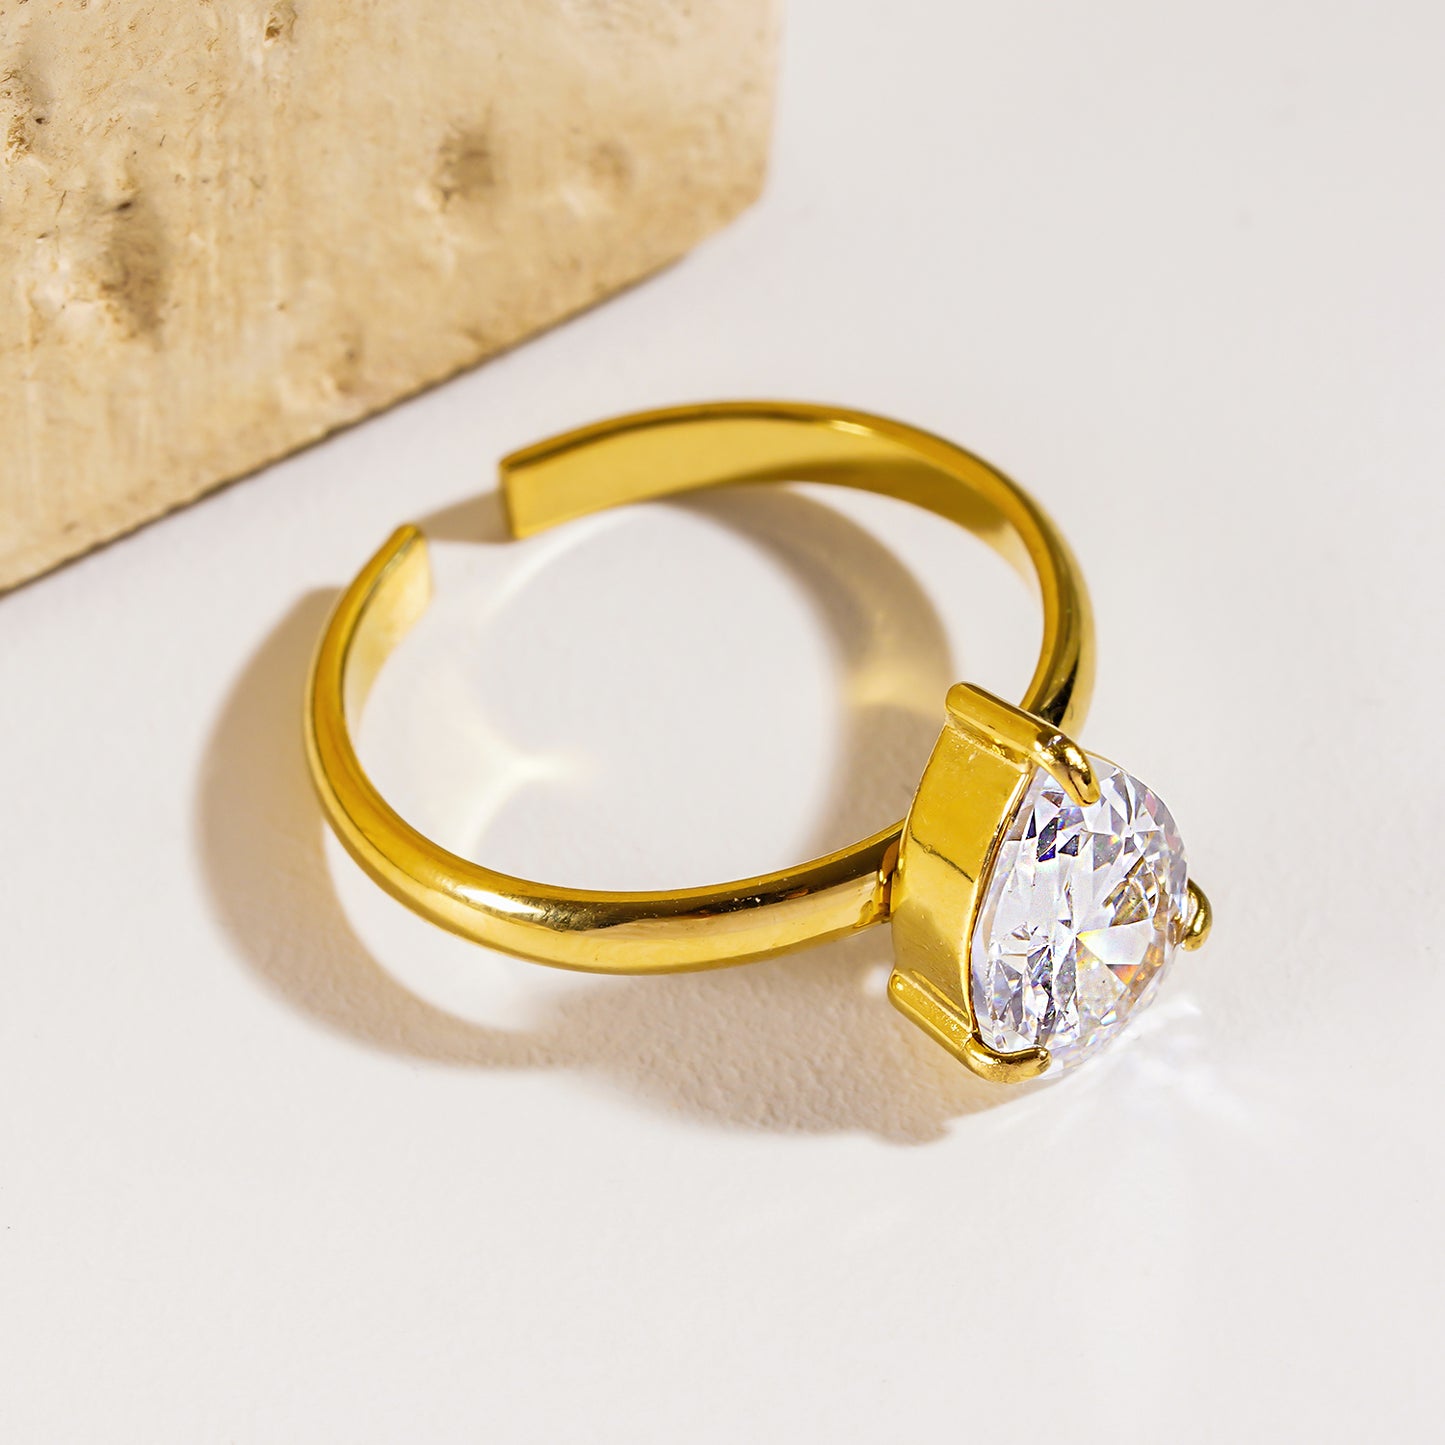 Style DIMONDA 3465: Classic Gold Ring with Prominent Teardrop Zirconia Centerpiece.